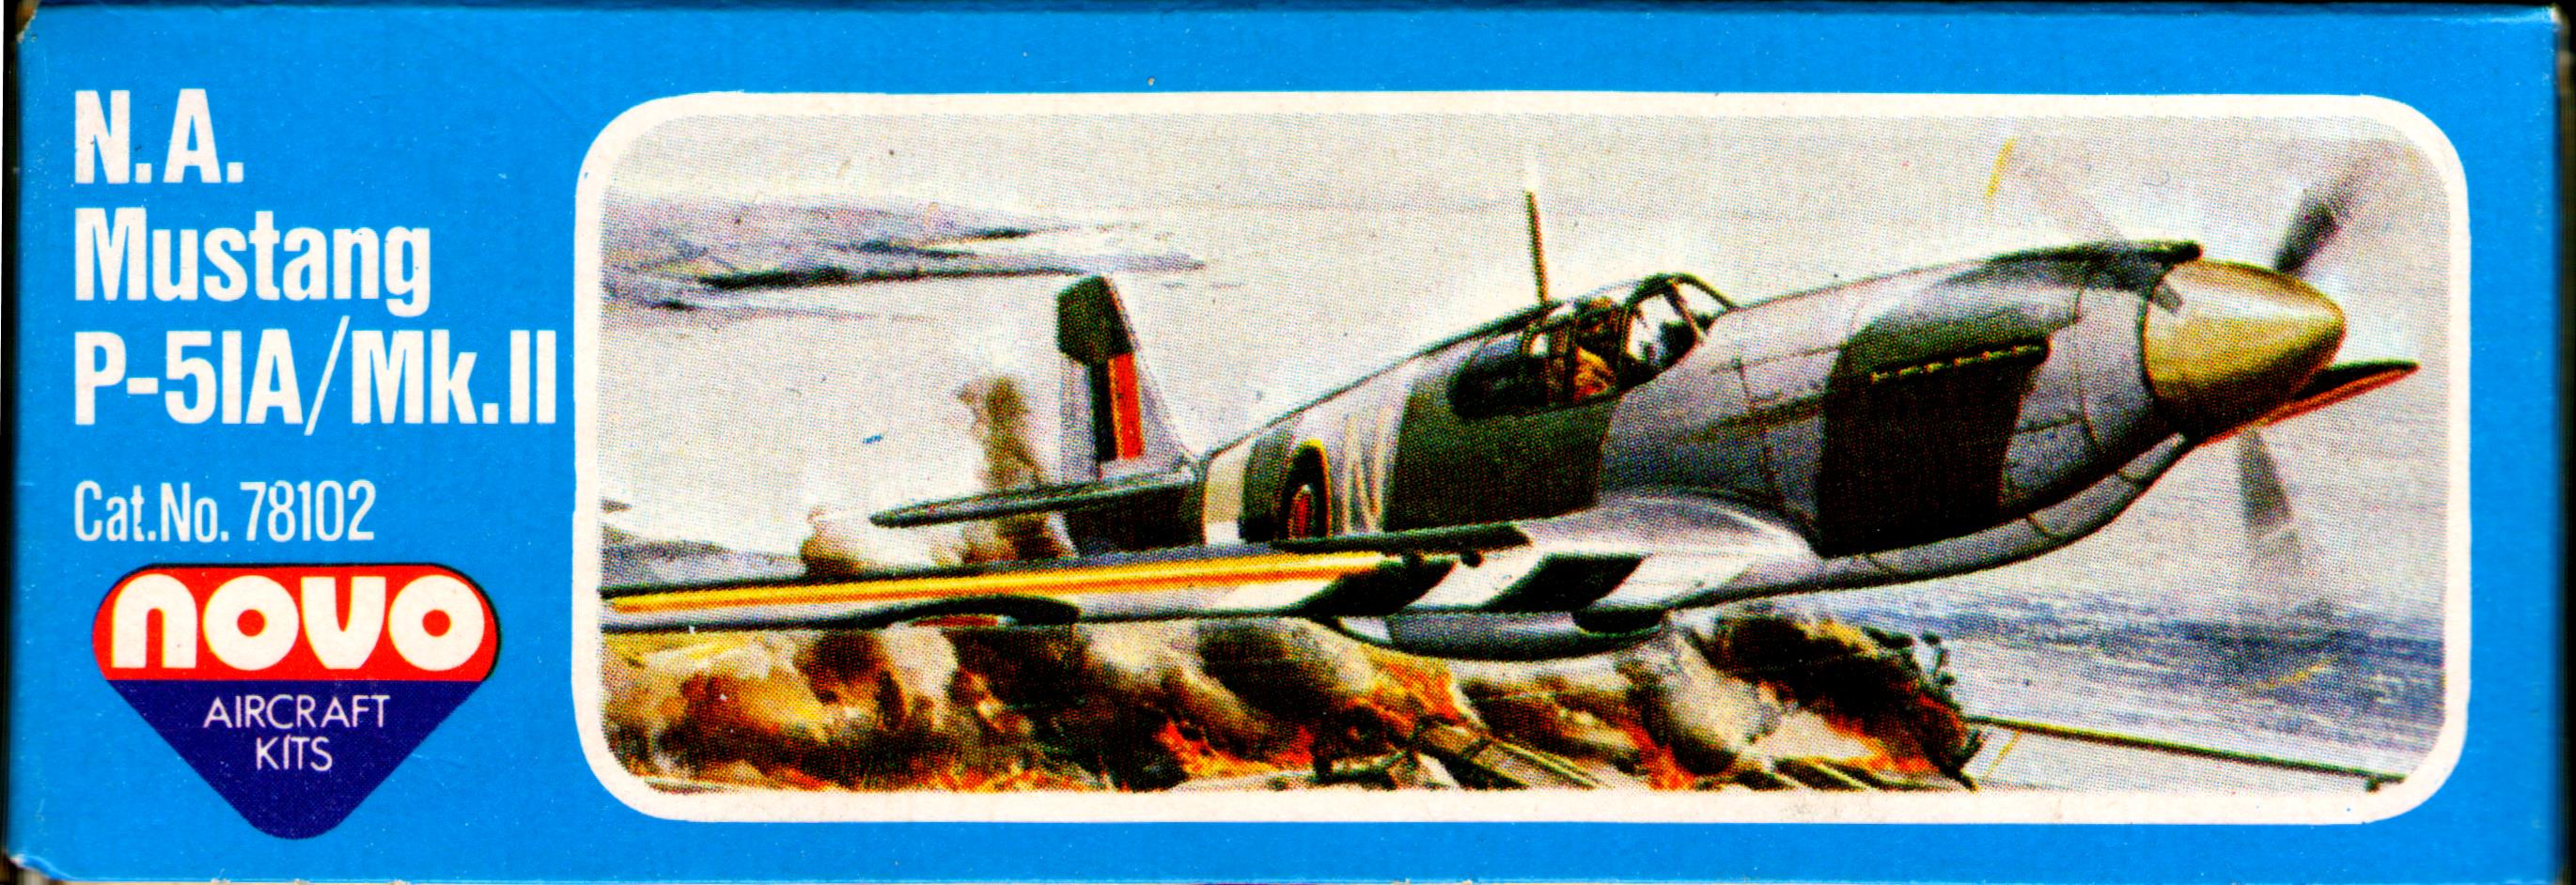 Содержание NOVO F196 Mustang P-51A (Mk.2) Fighter Reconnaissance, финский картон